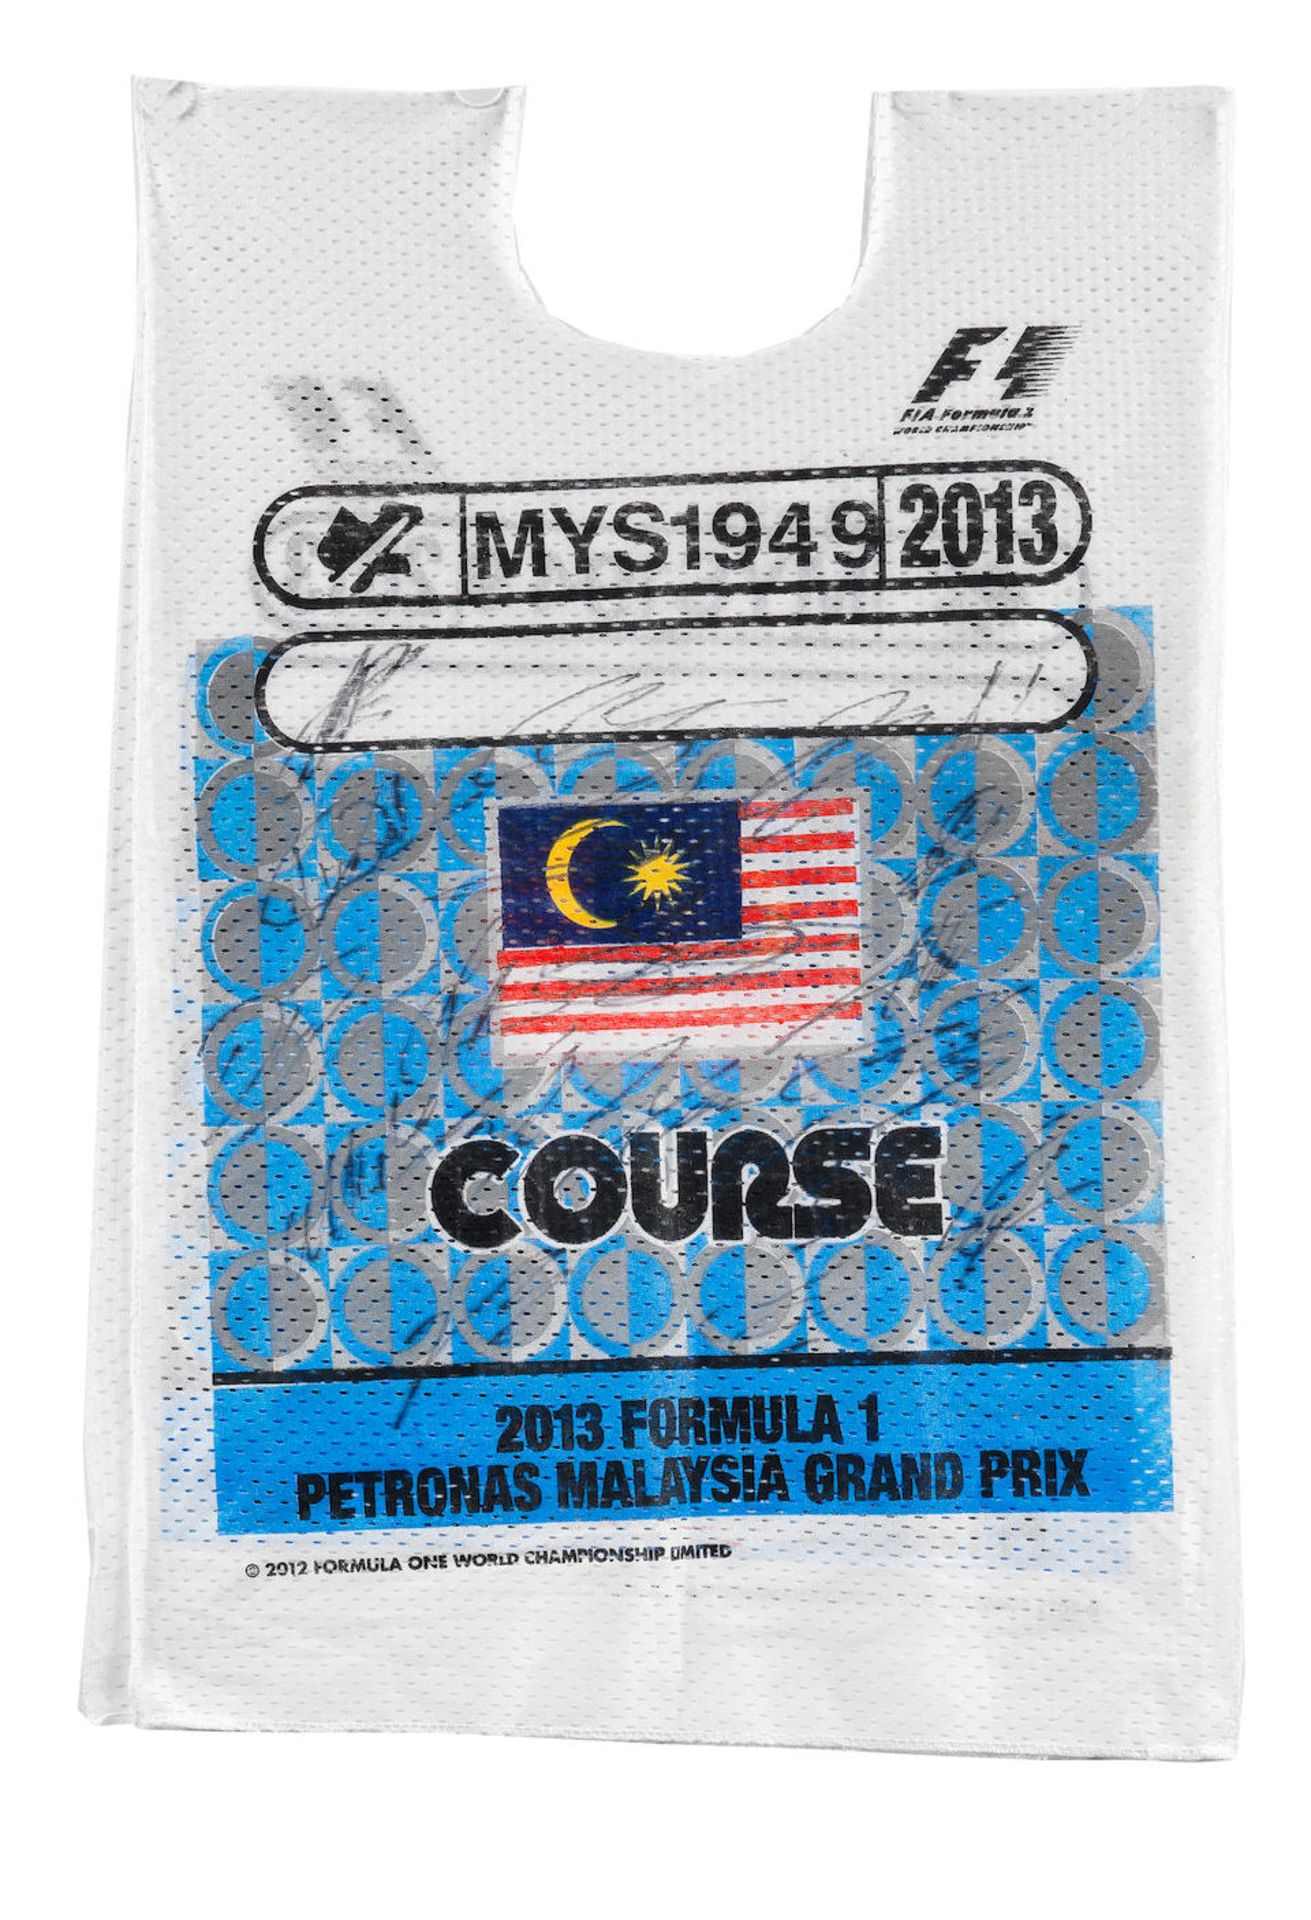 A signed 2013 Malaysian Grand Prix F1 Tabard,